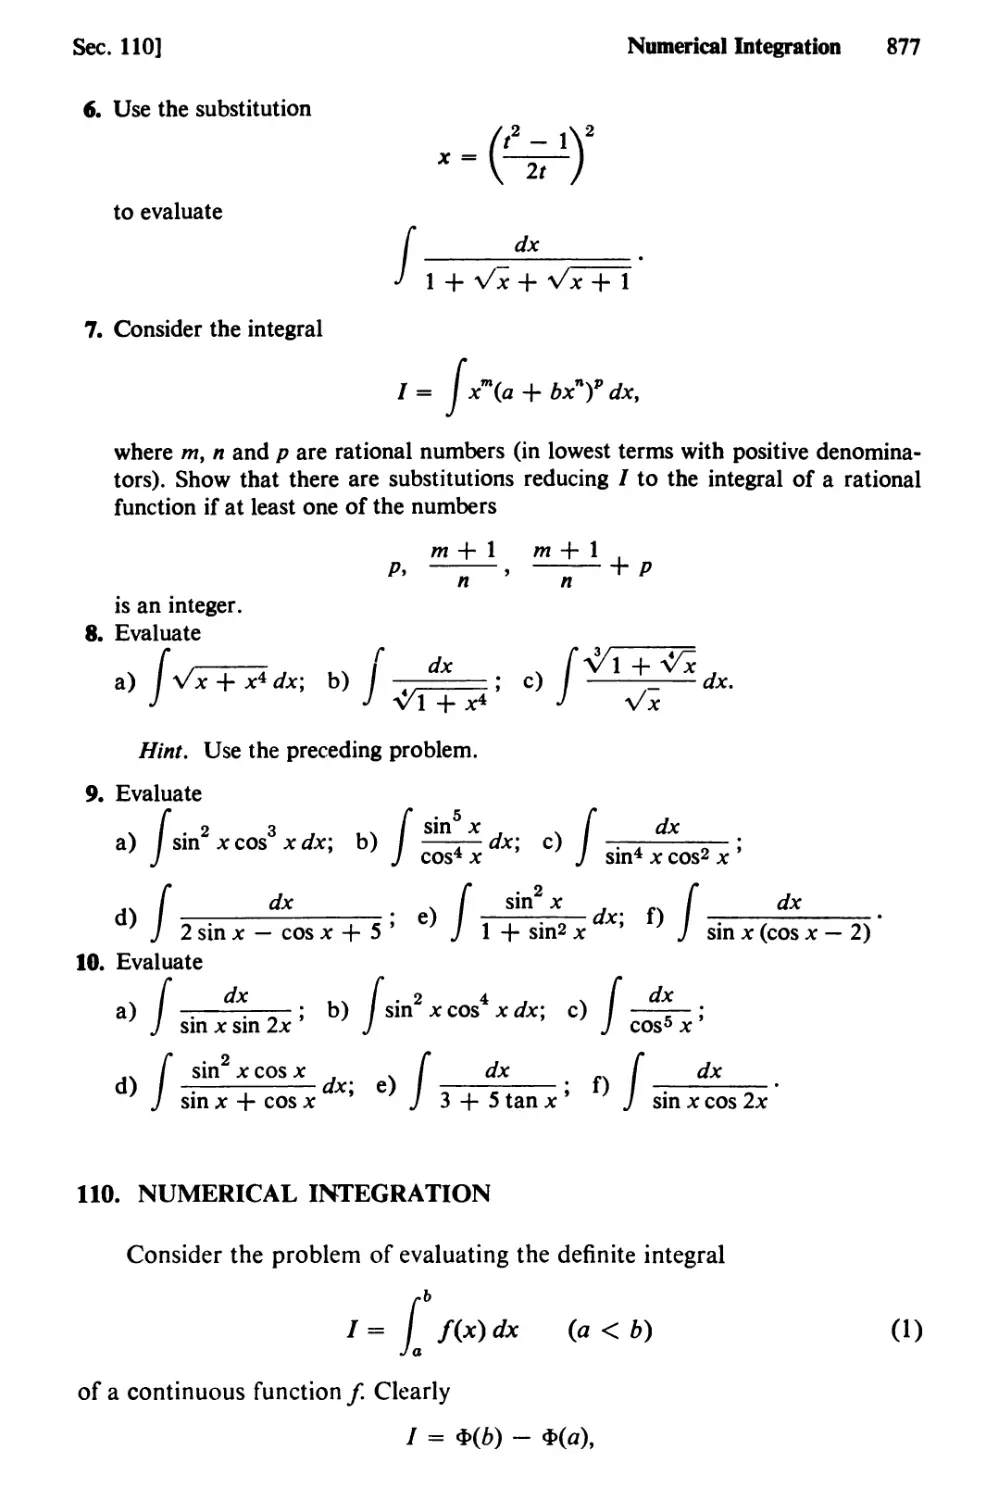 110. Numerical Integration